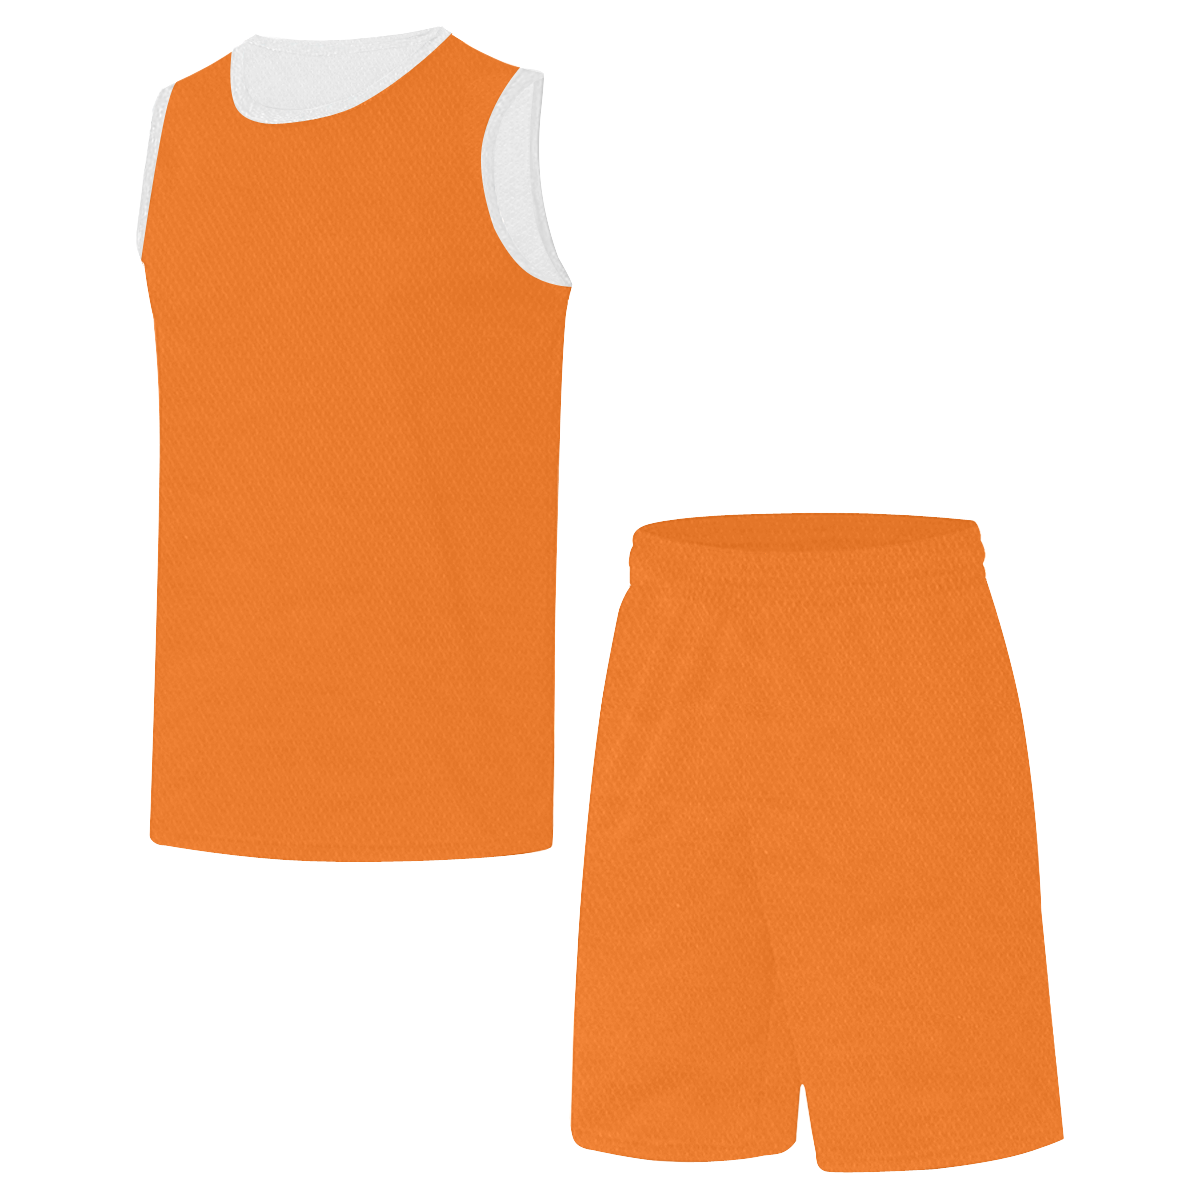 color pumpkin All Over Print Basketball Uniform